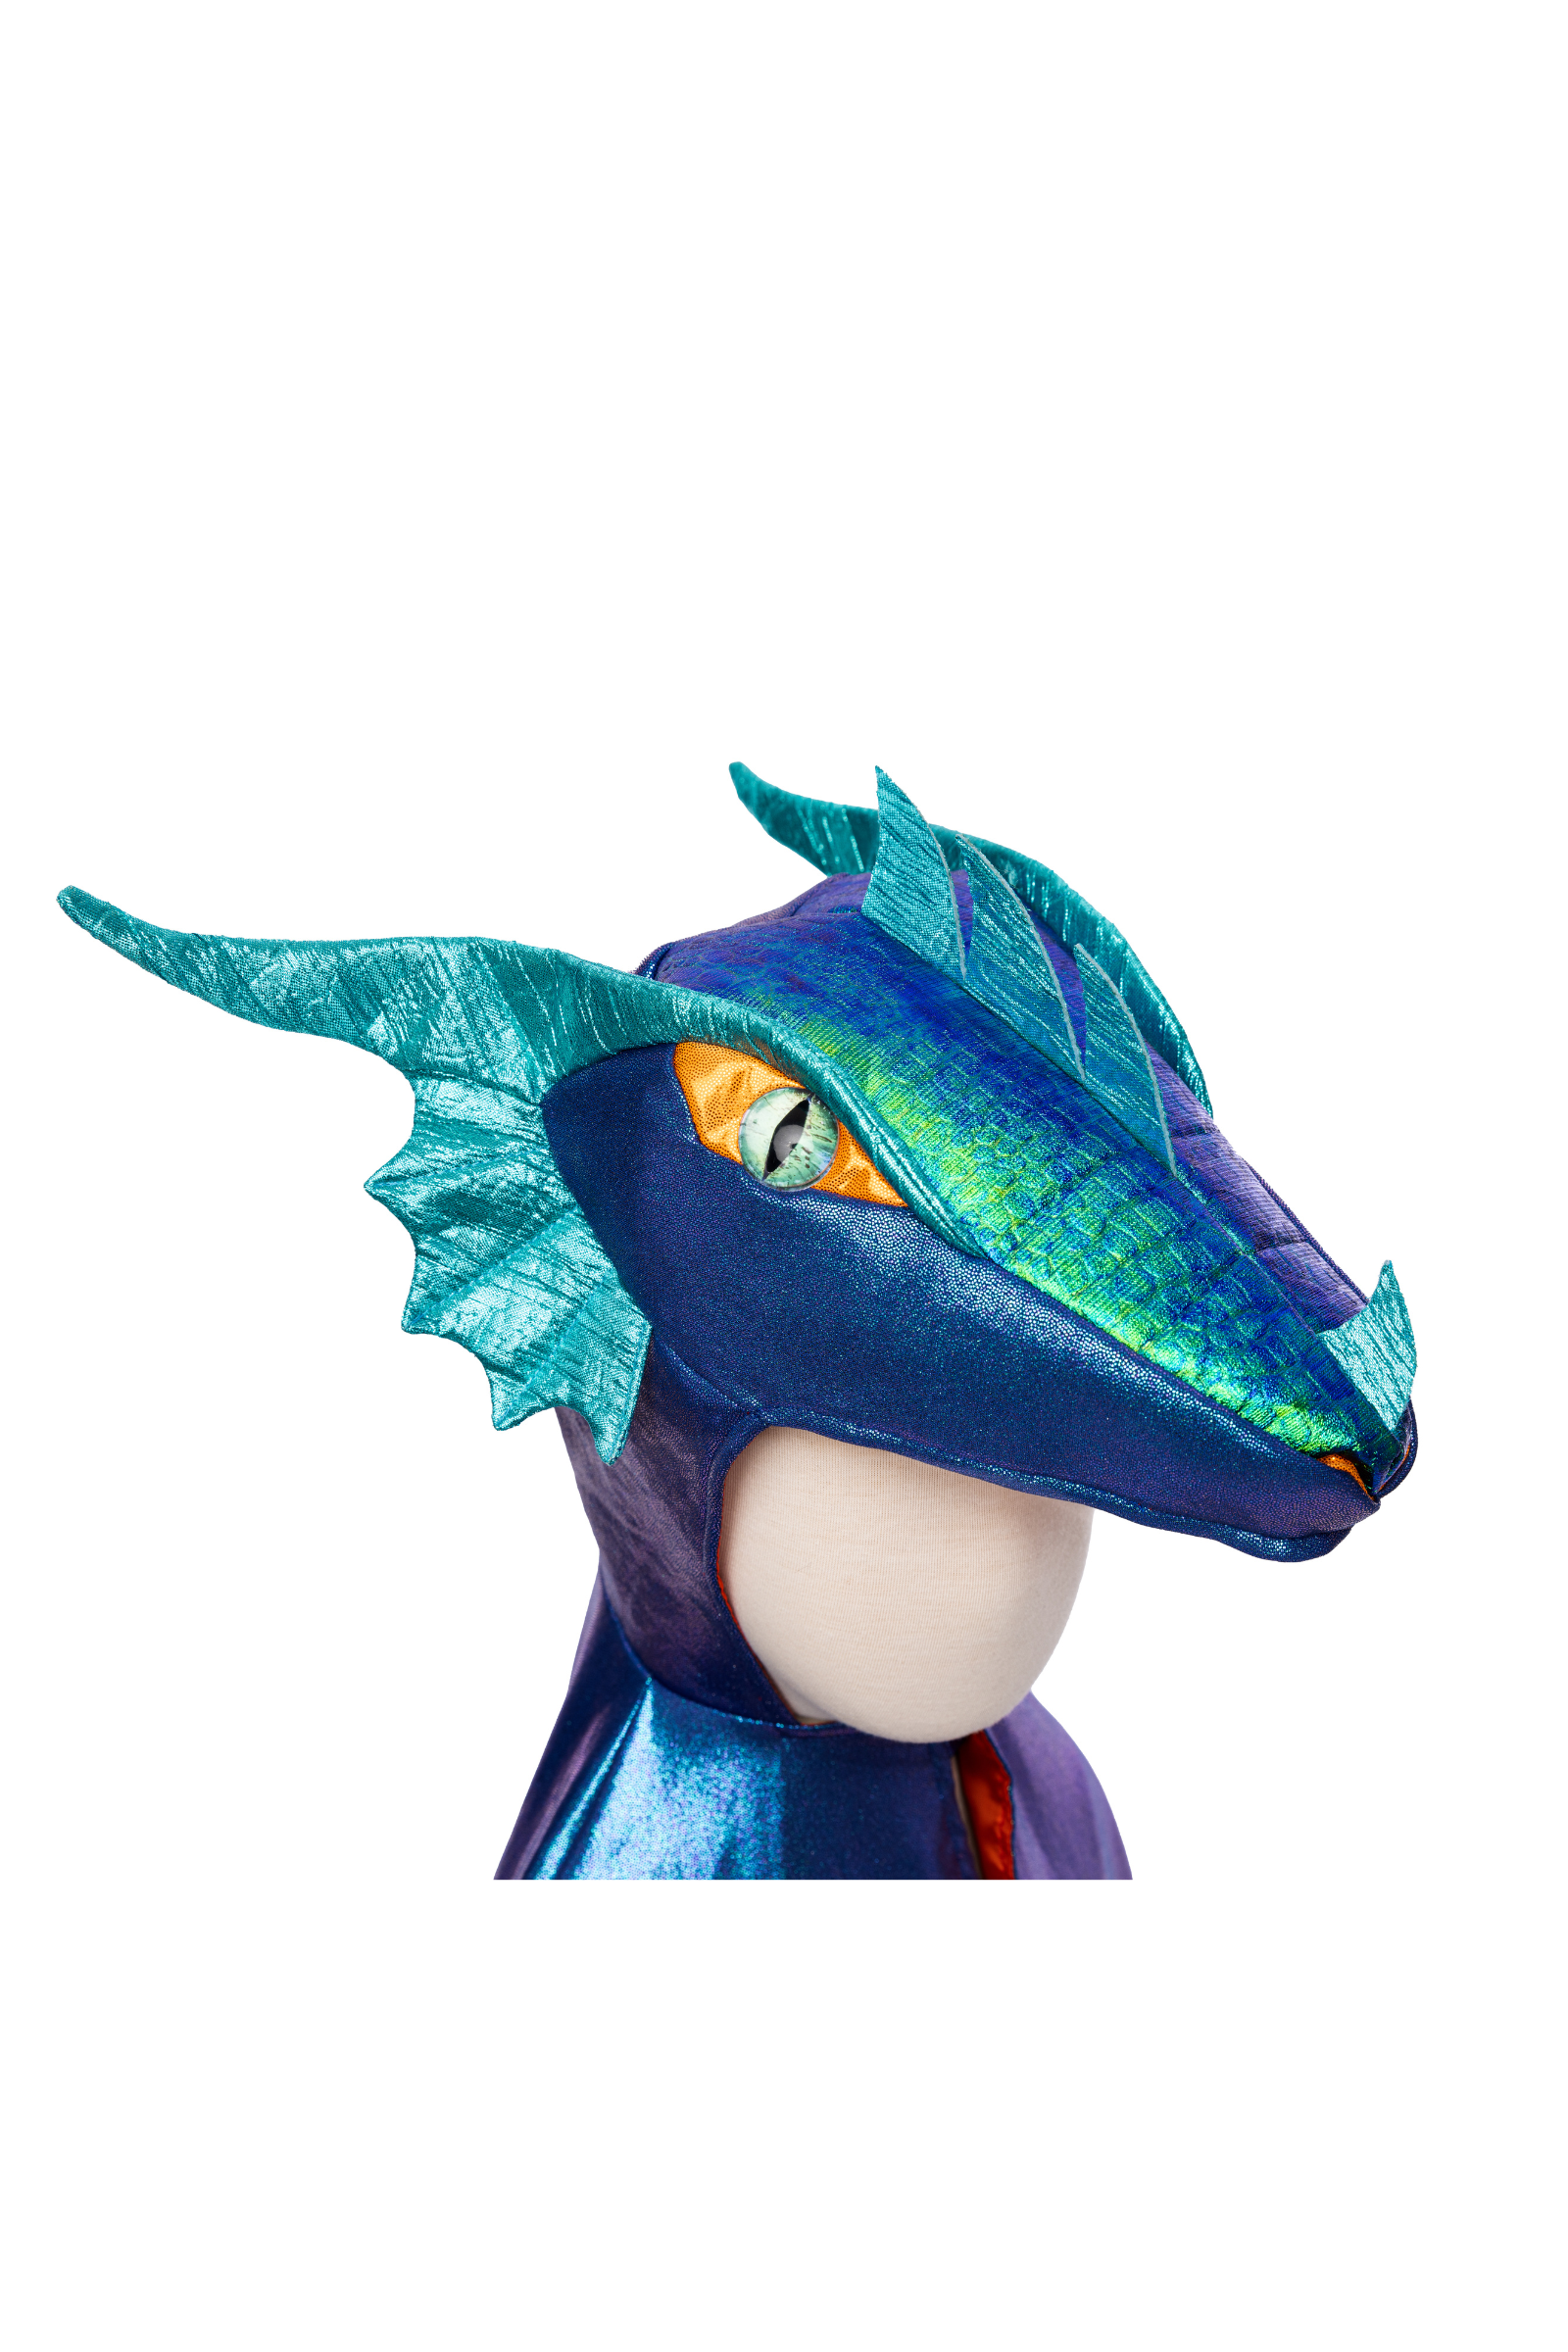 Reversible Rainbow Unicorn/Dragon Cape - Size 5-6 - Toy Sense